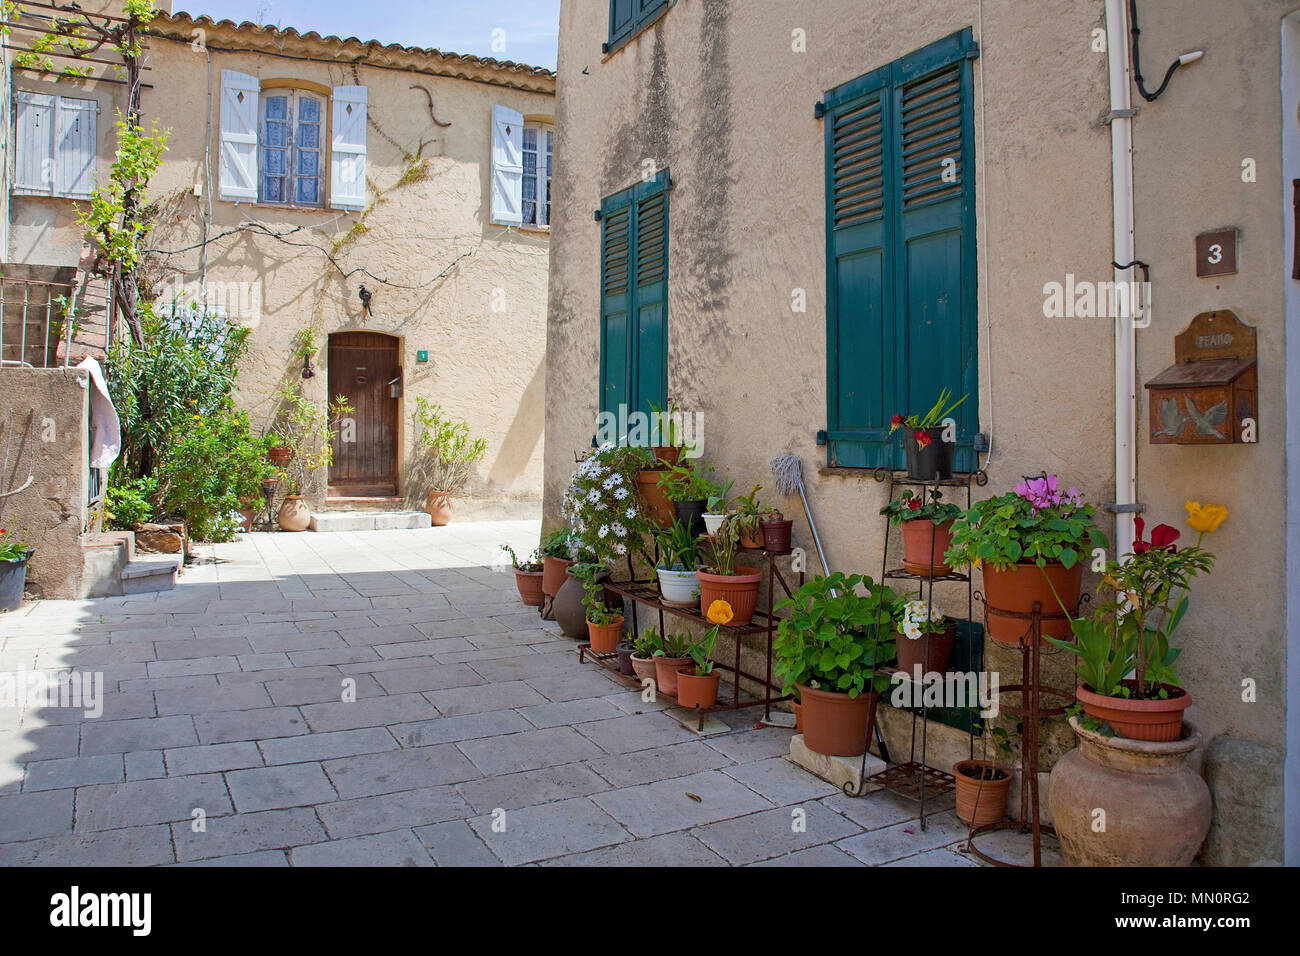 Greened alley at village Gassin, Cote d'Azur, Département Var, Provence-Alpes-Côte d’Azur, South France, France, Europe Stock Photo